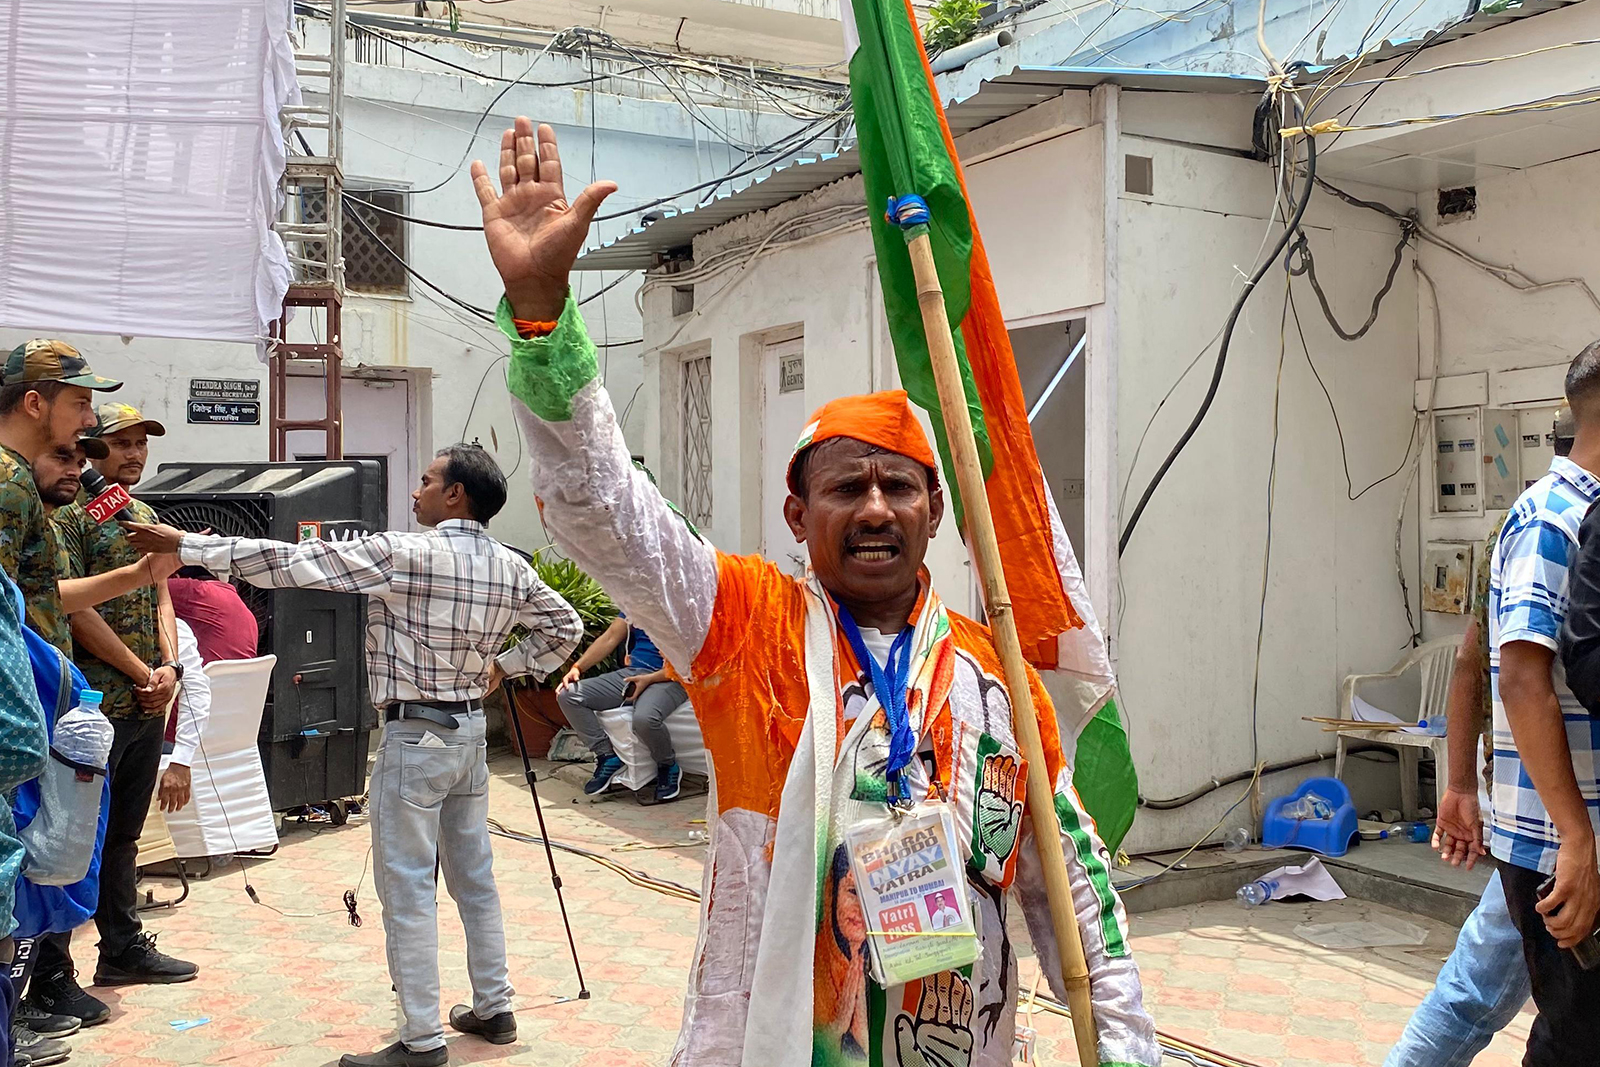 Lakshman Valhekar at the Congress party headquarters in Delhi, India, on June 4.